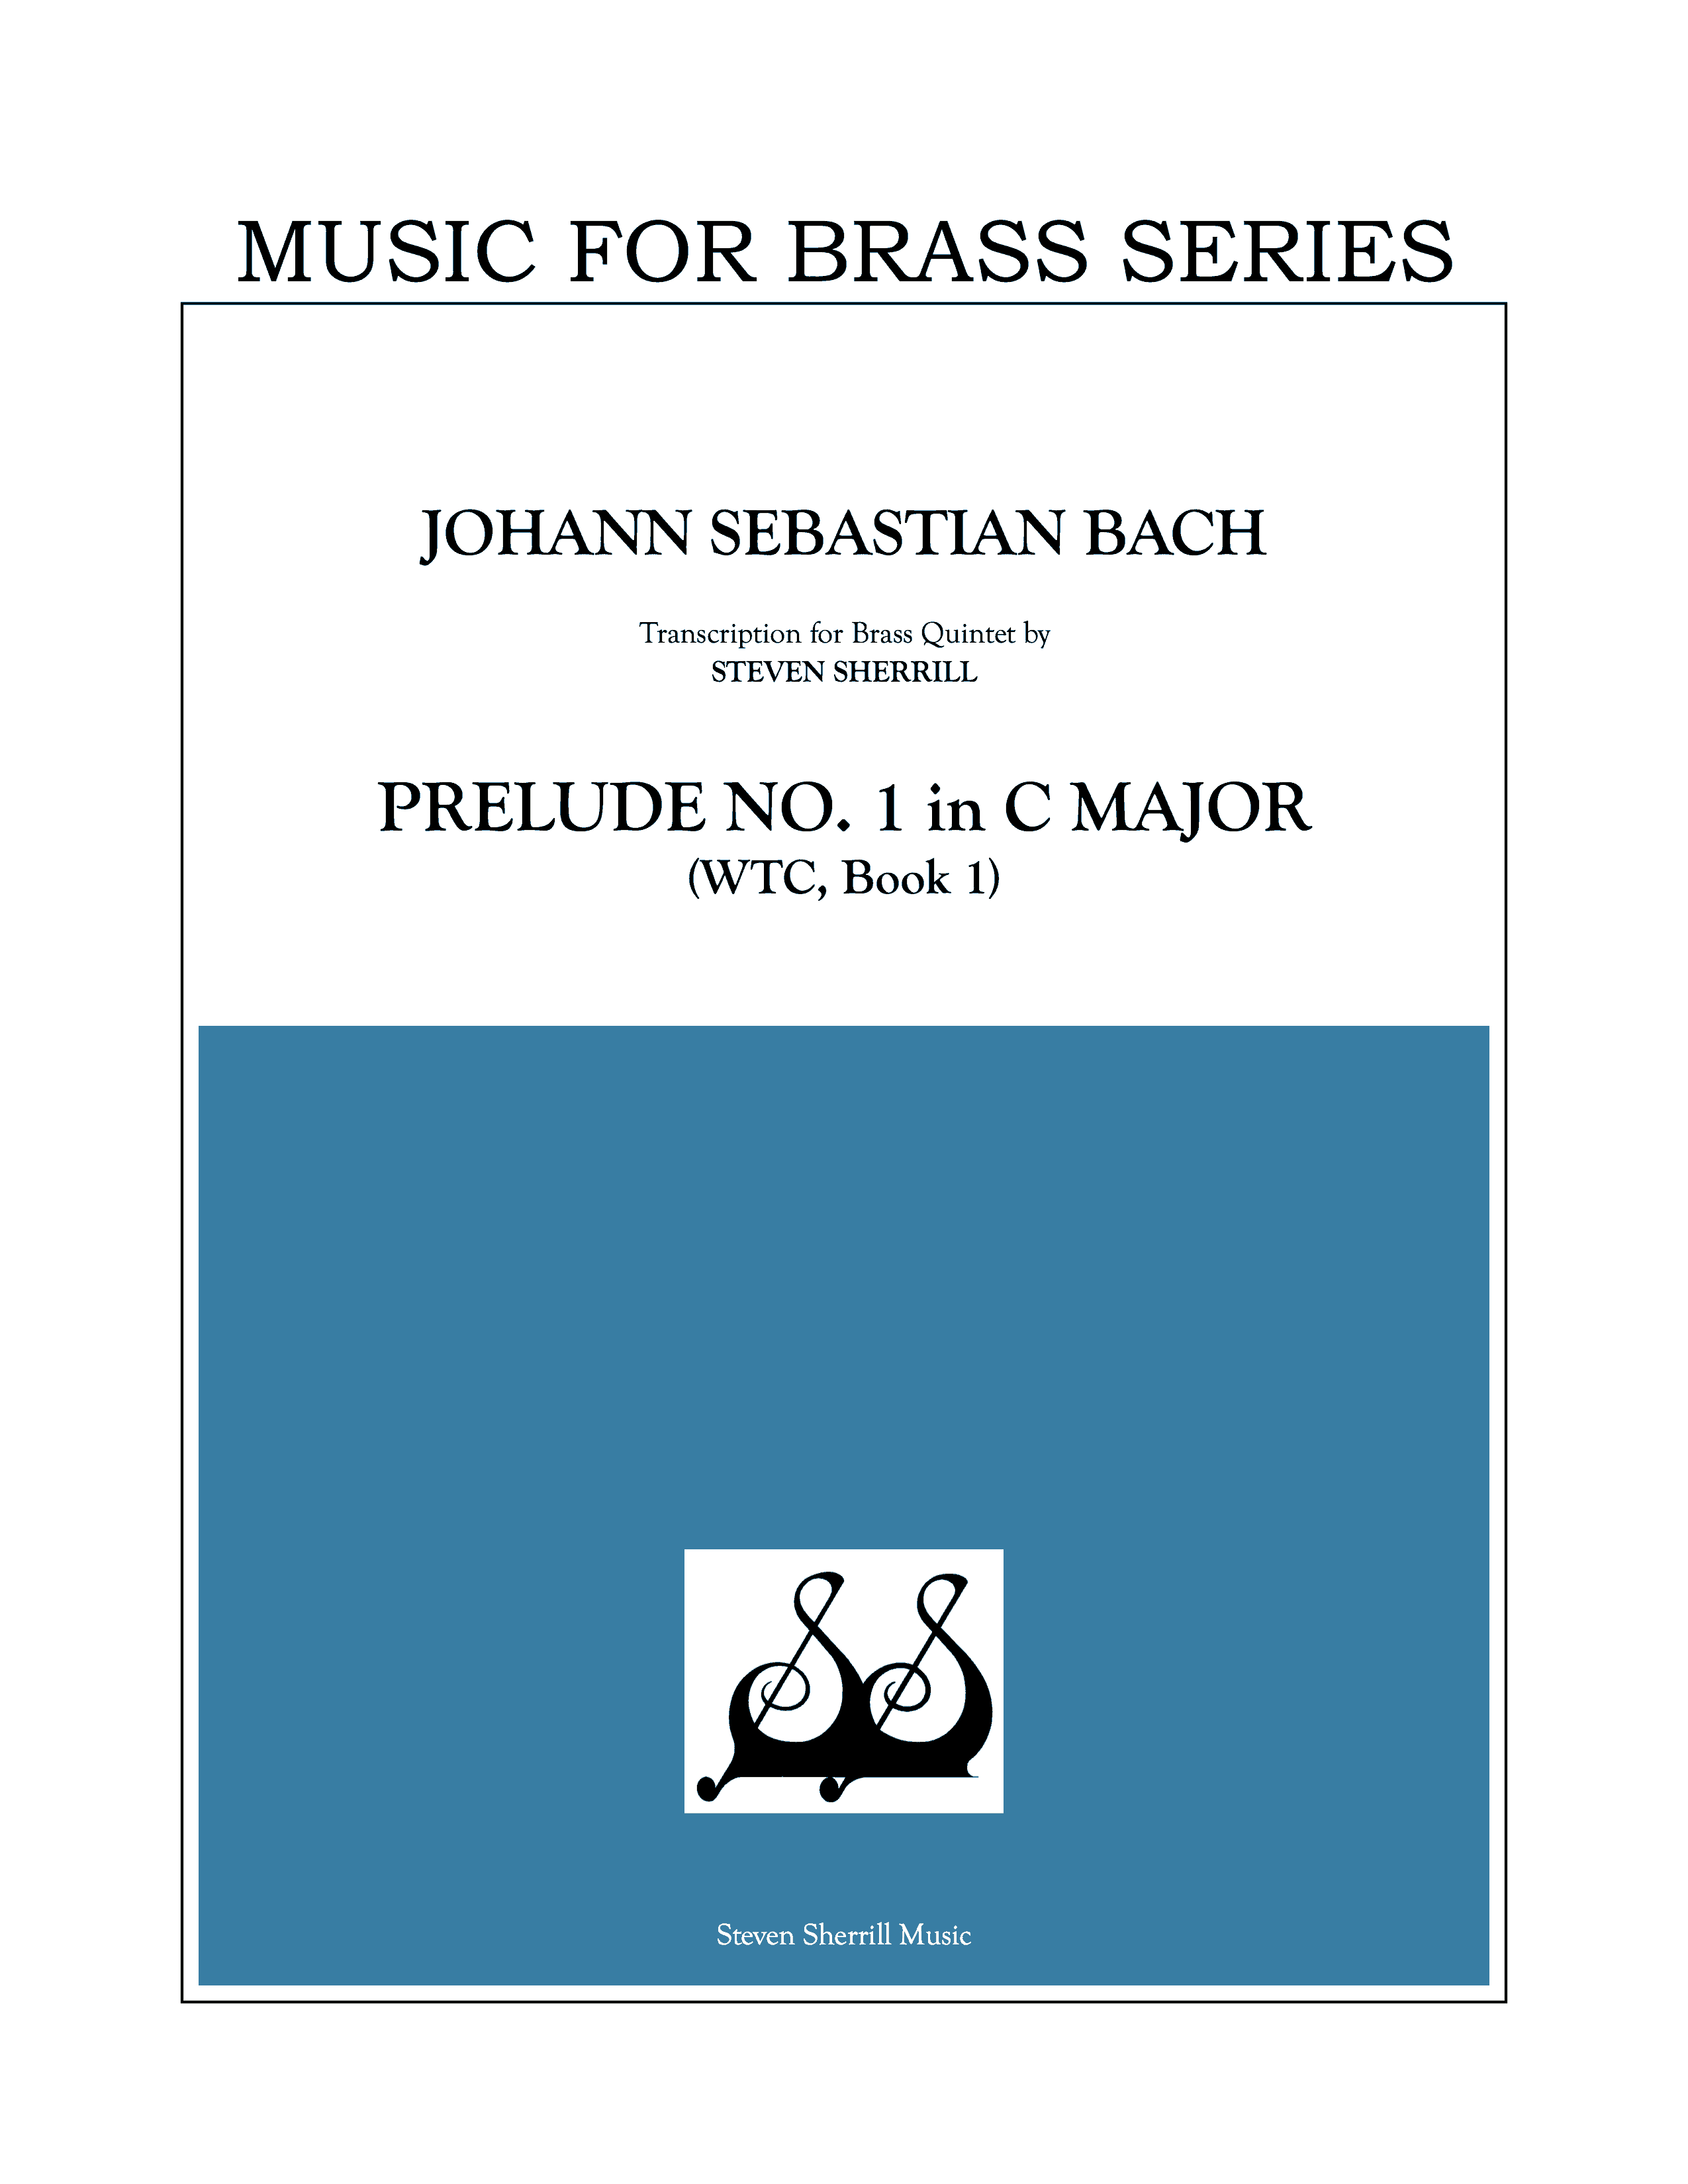 Prelude No. 1 in C Major (WTC Book 1) cover page